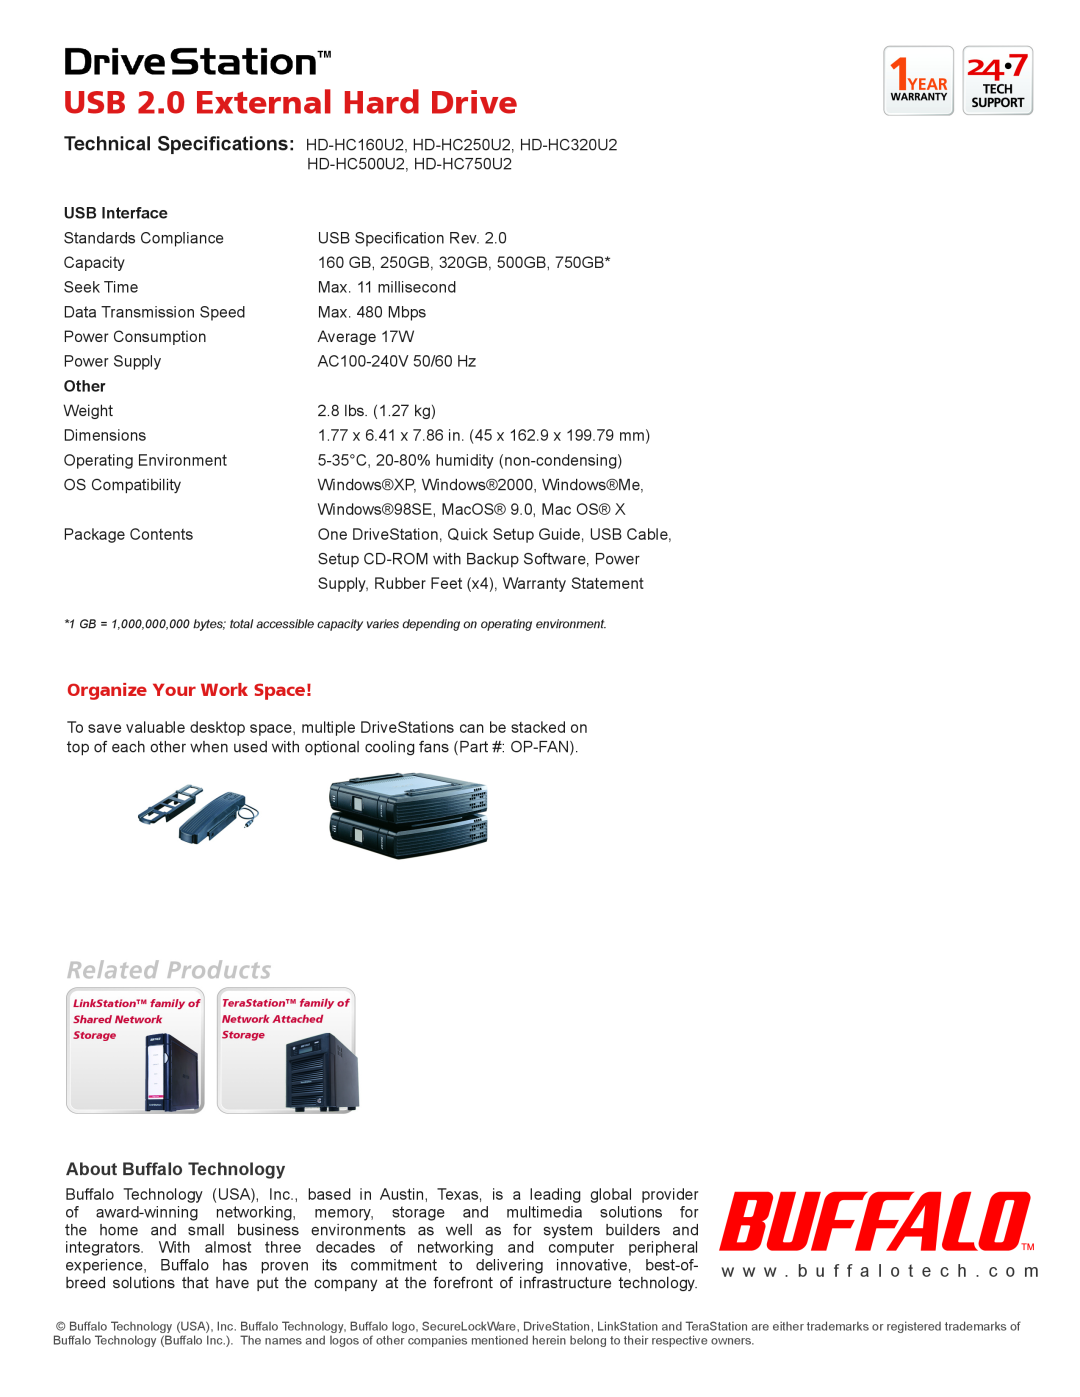 Buffalo Technology HD-HC320U2 manual Organize Your Work Space, USB 2.0 External Hard Drive, About Buffalo Technology, Other 